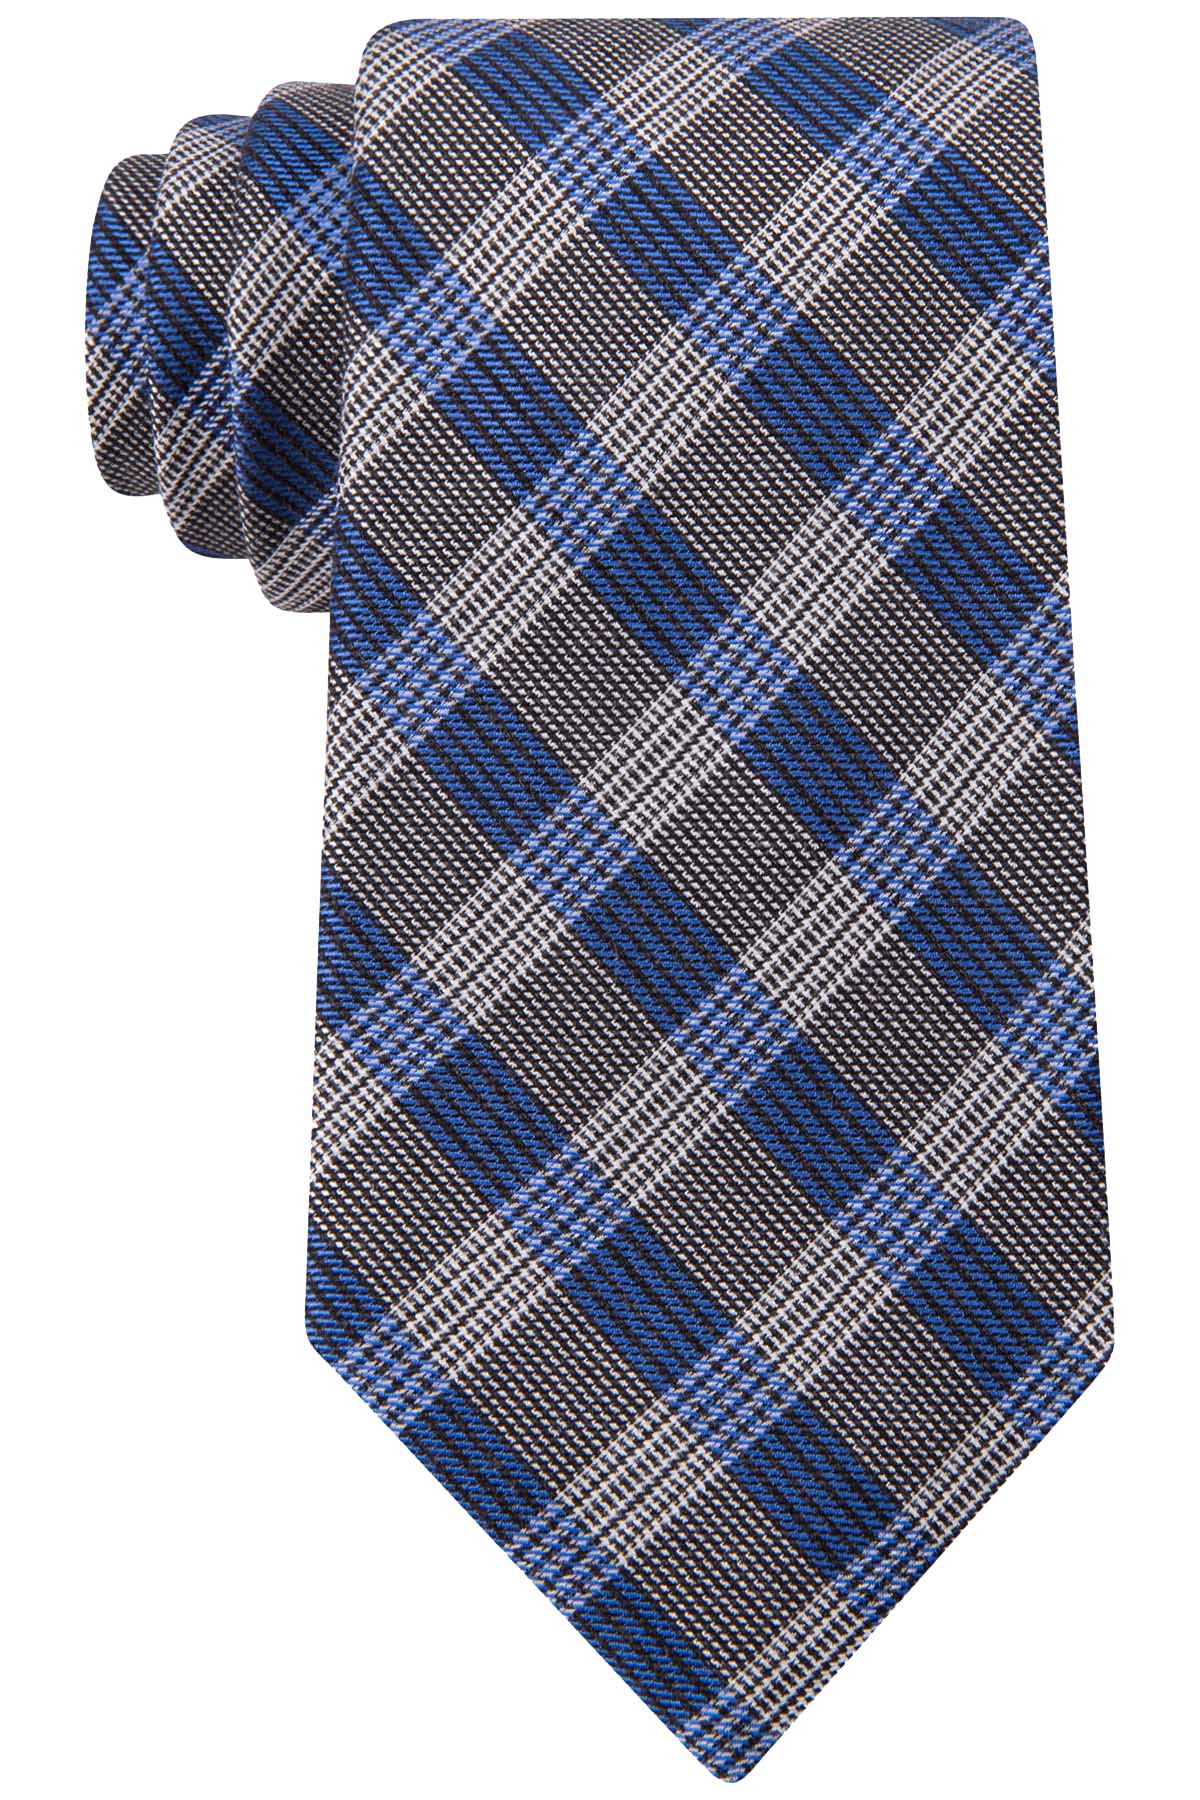 Calvin Klein Blue/Grey Schoolboy Glenn Plaid Tie